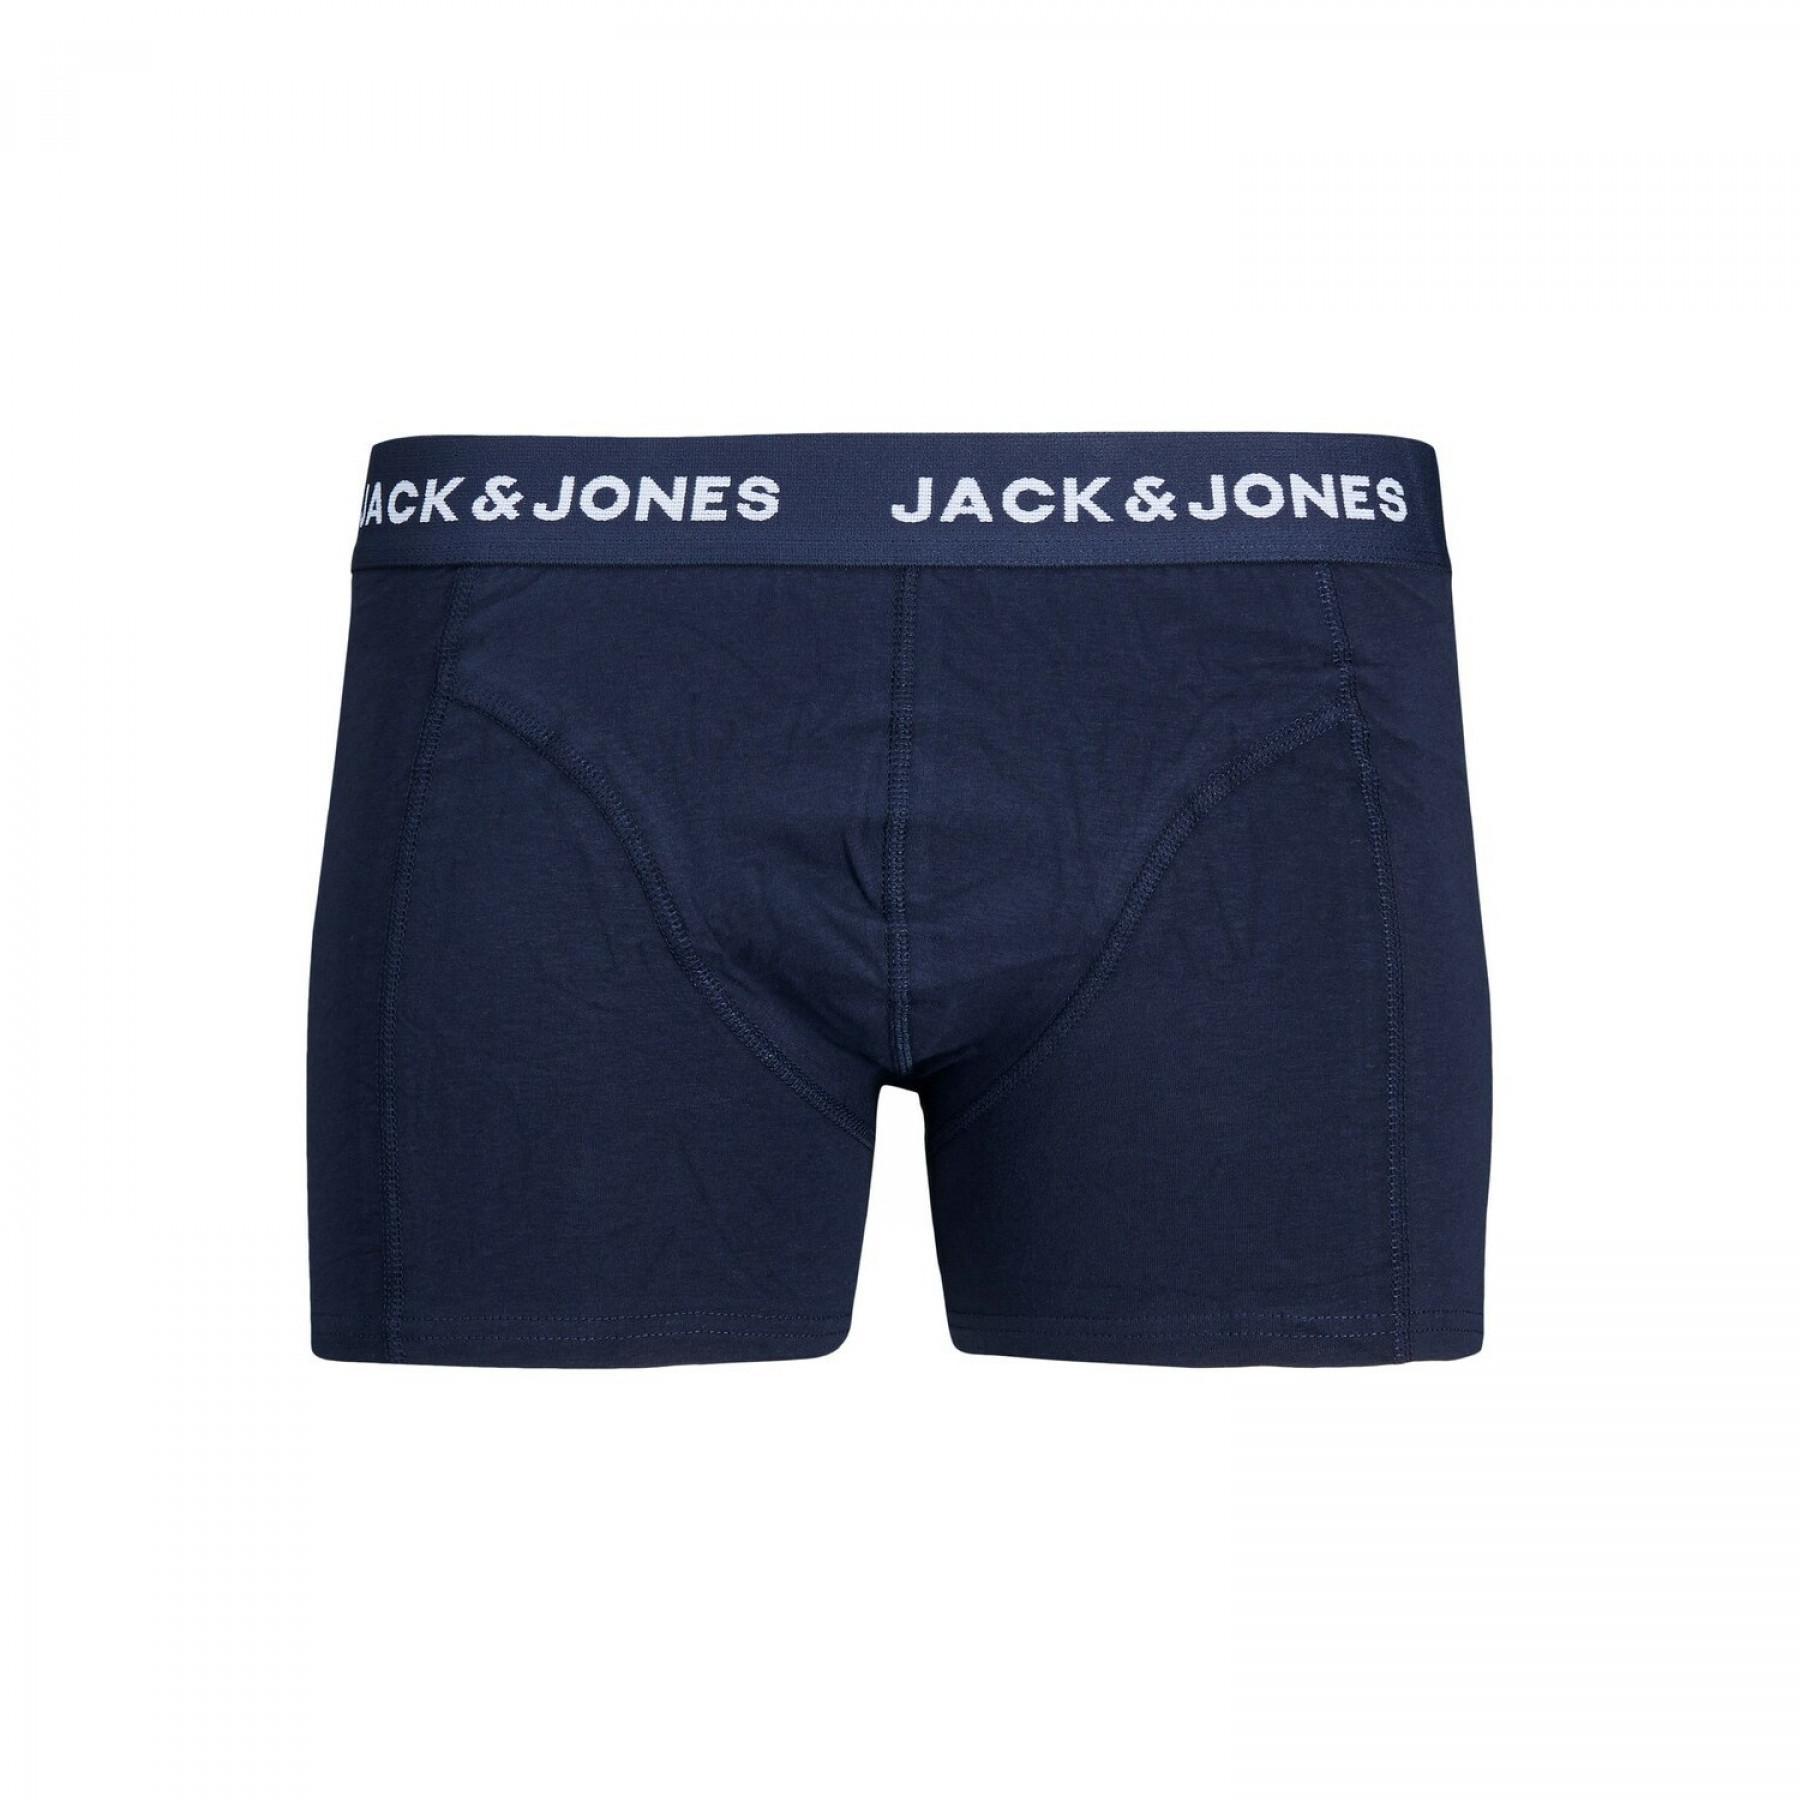 Set van 5 boxershorts Jack & Jones friday